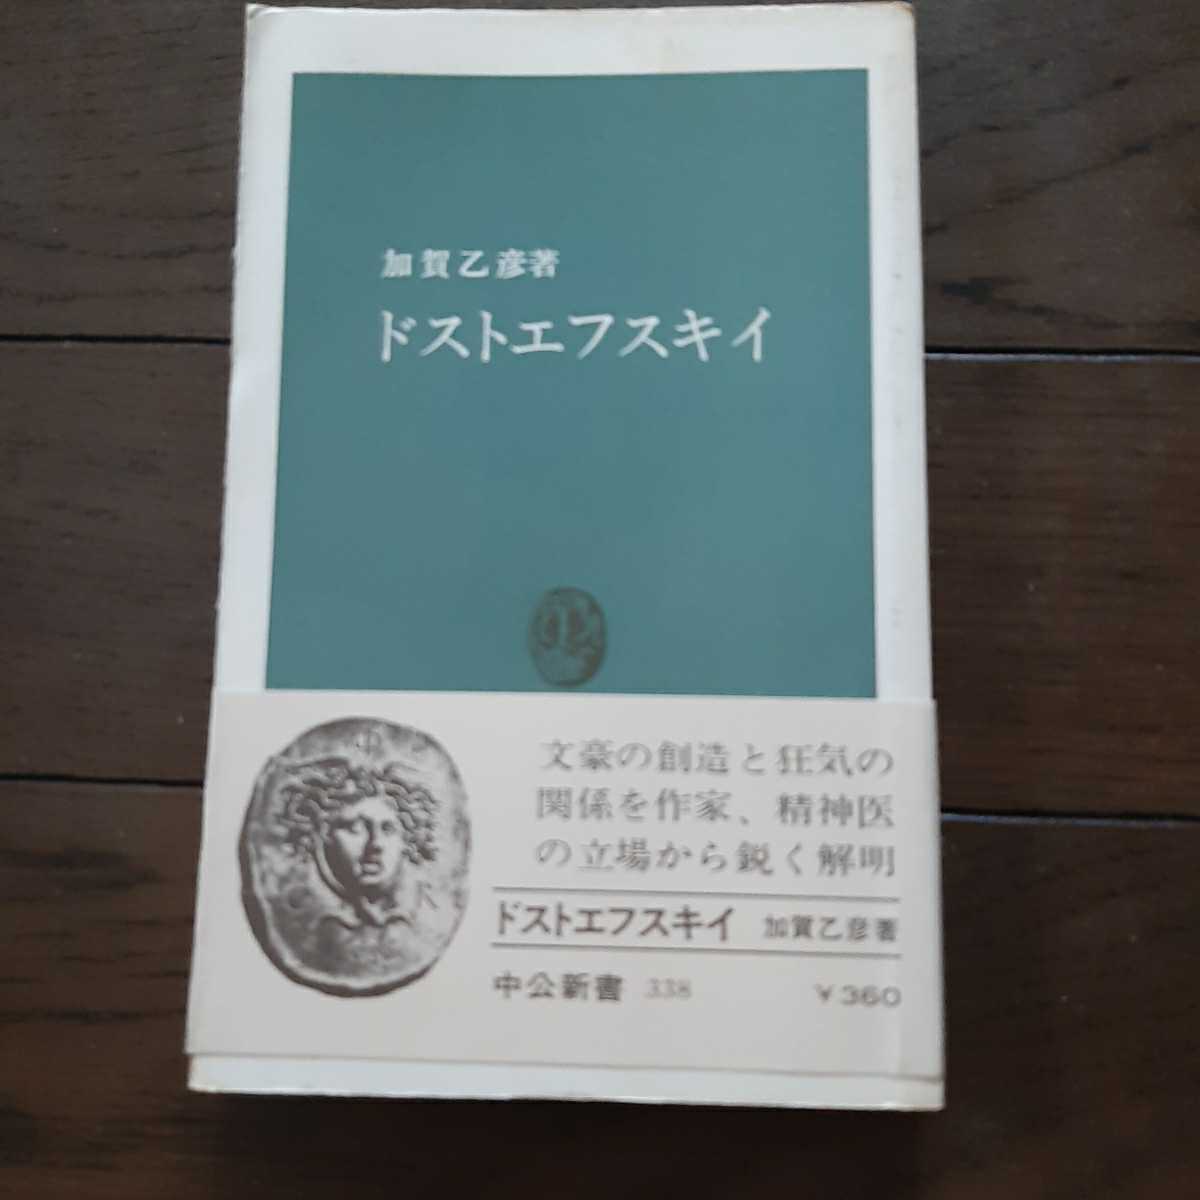 do -тактный efskii Kagao Tohiko средний . новая книга 